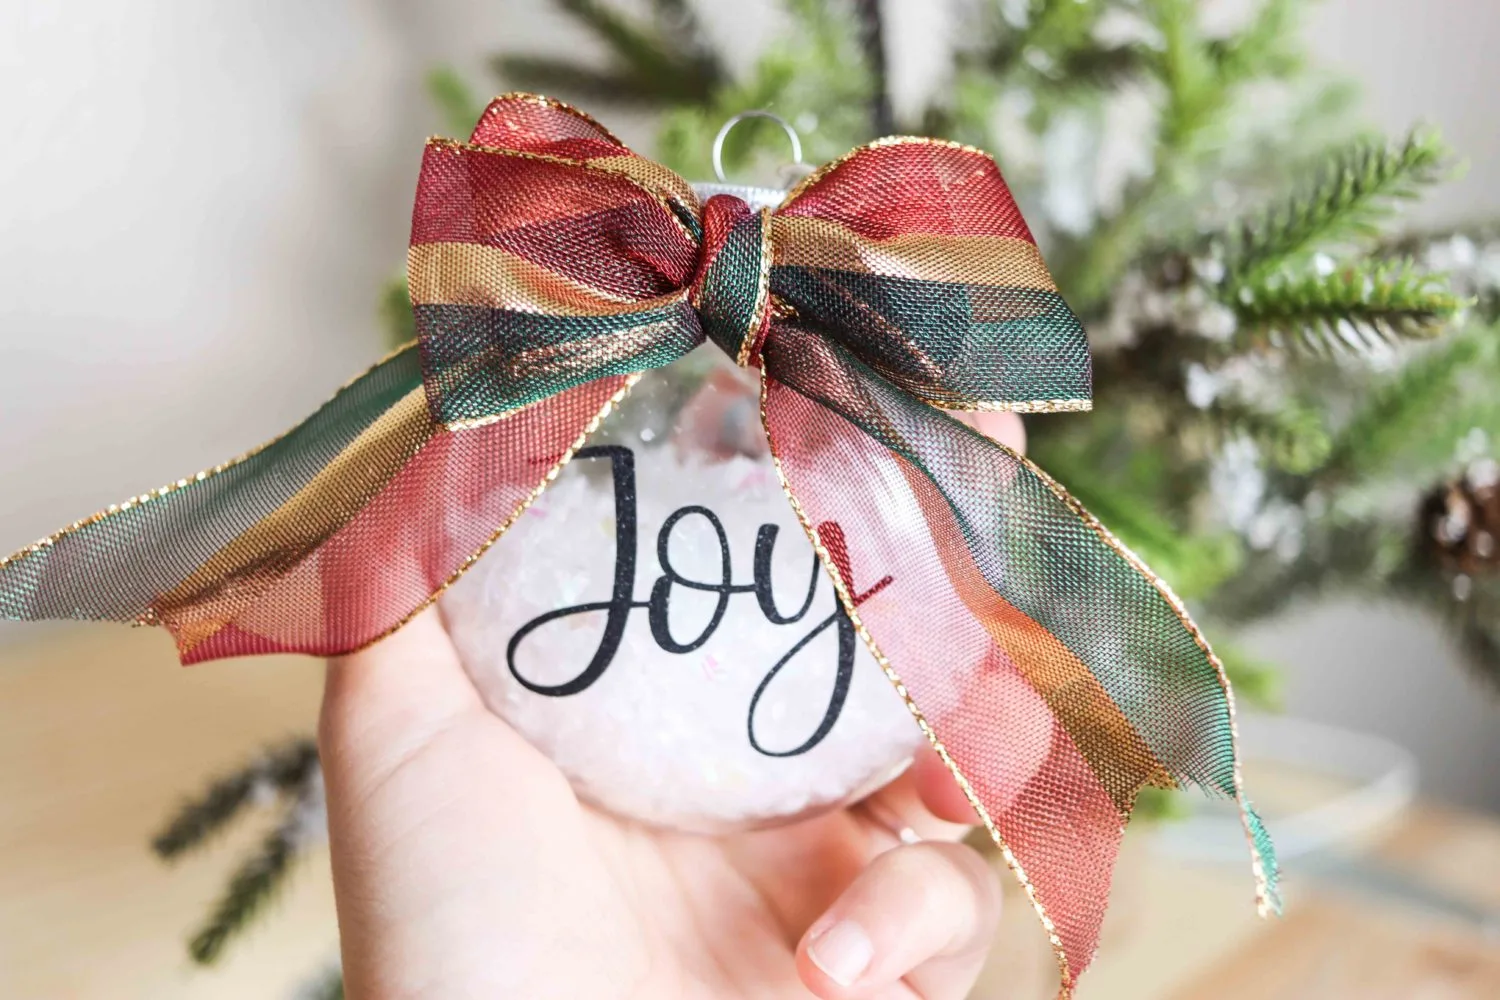 Joy Christmas ornament made with Cricut